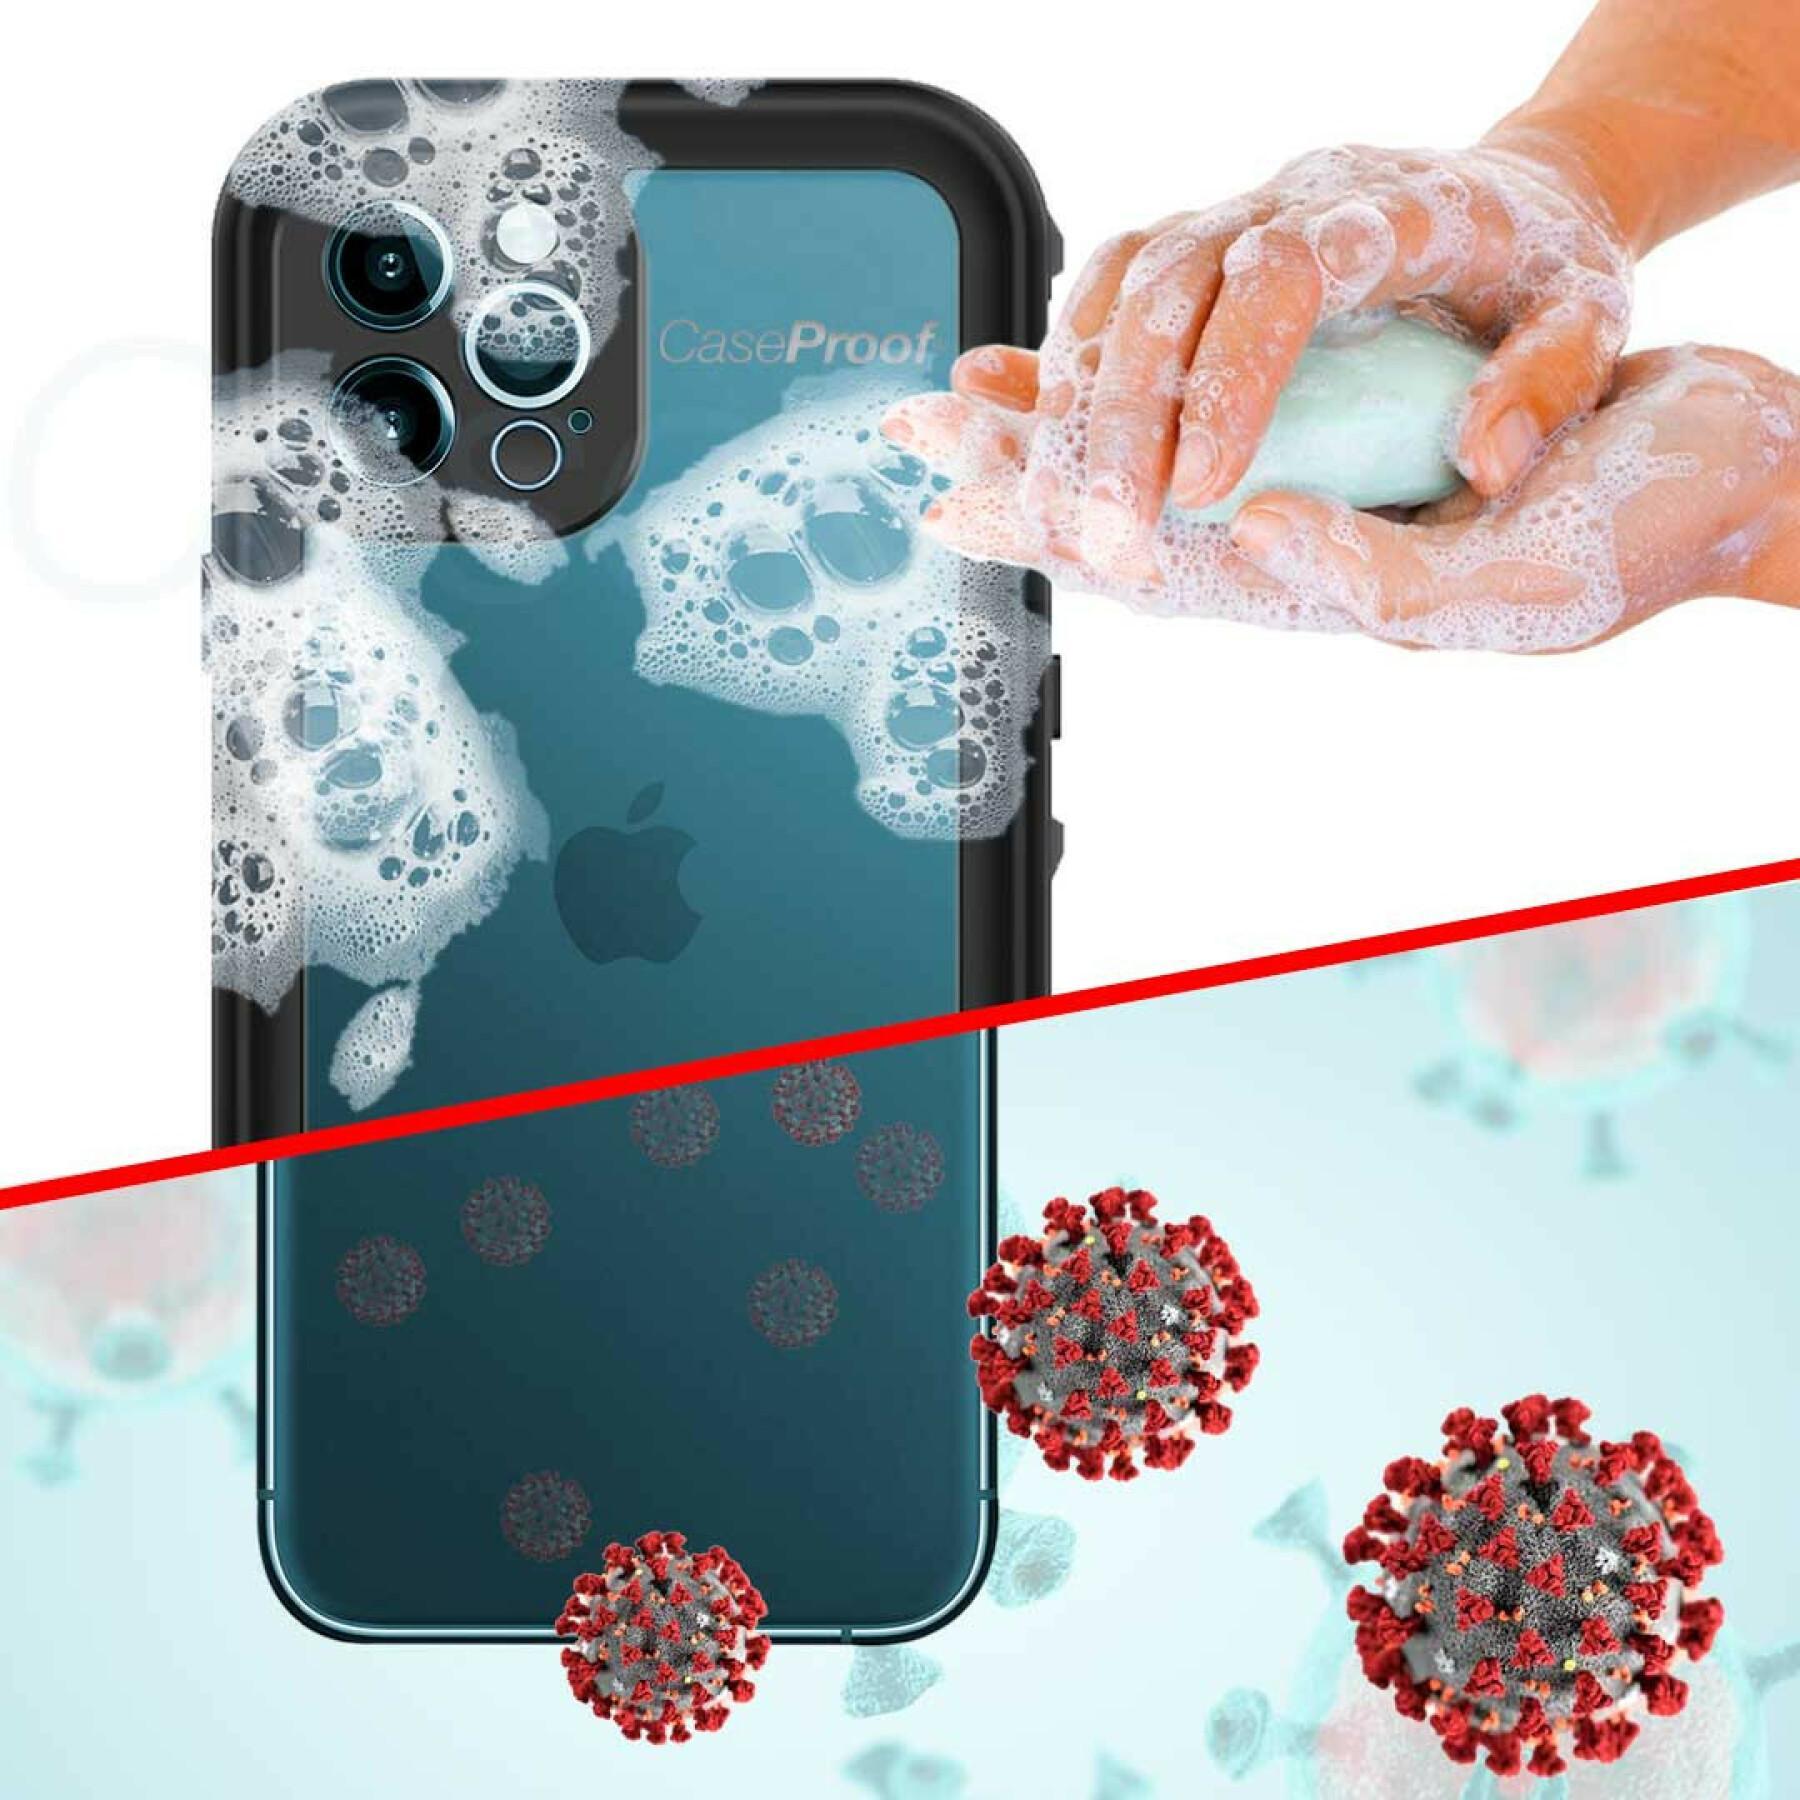 Smartphone-Hülle iphone 12 pro wasserdicht und stoßfest waterproof CaseProof